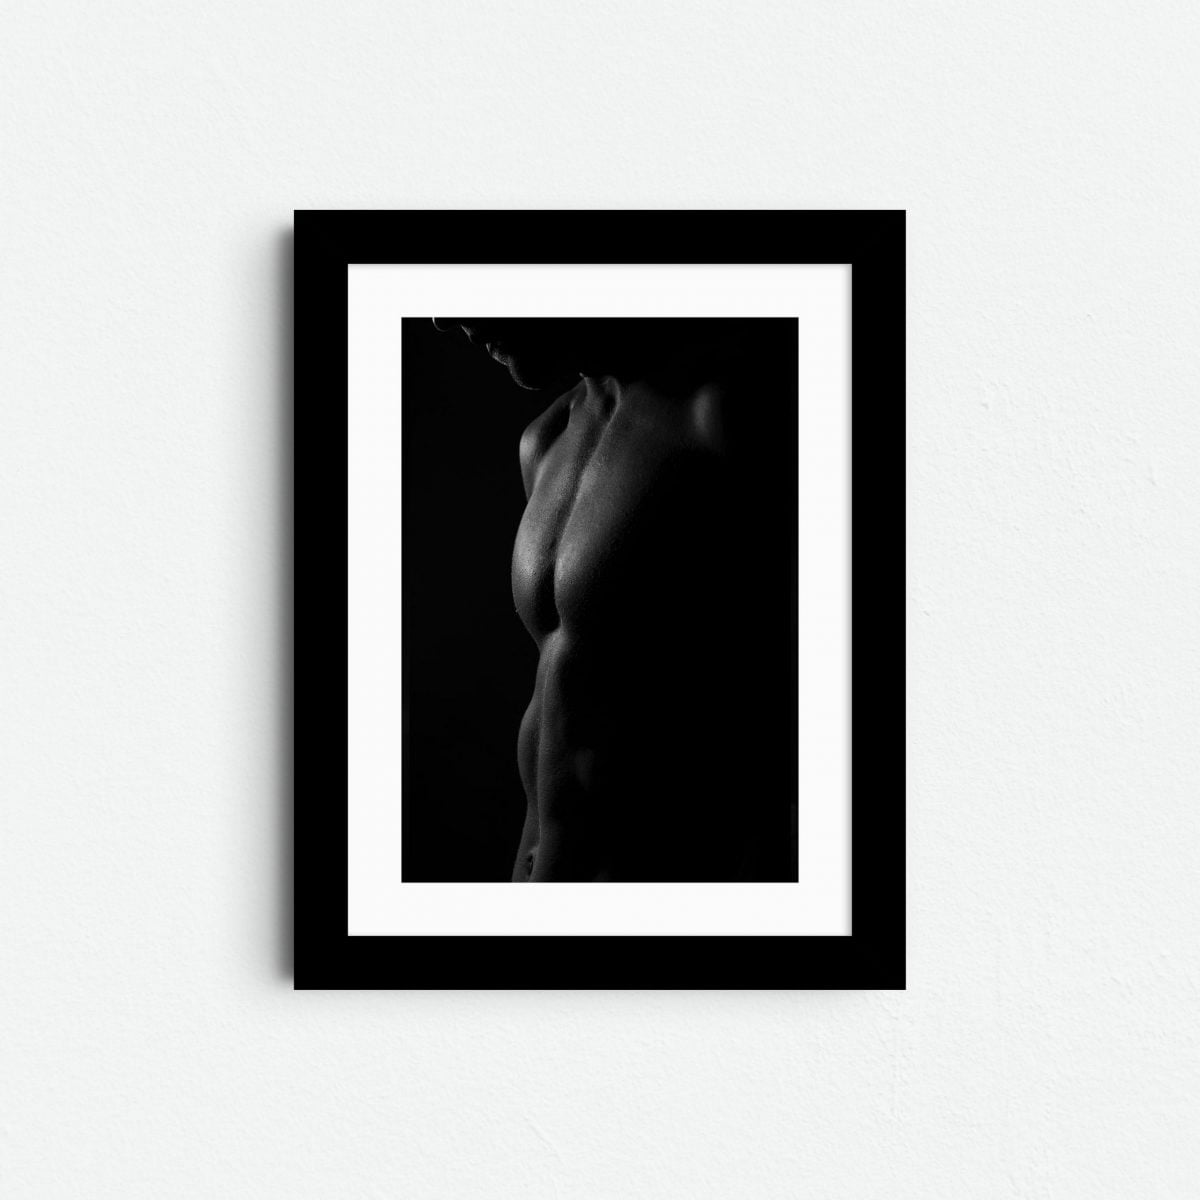 his breath nude erotic wall art prints framed portrait